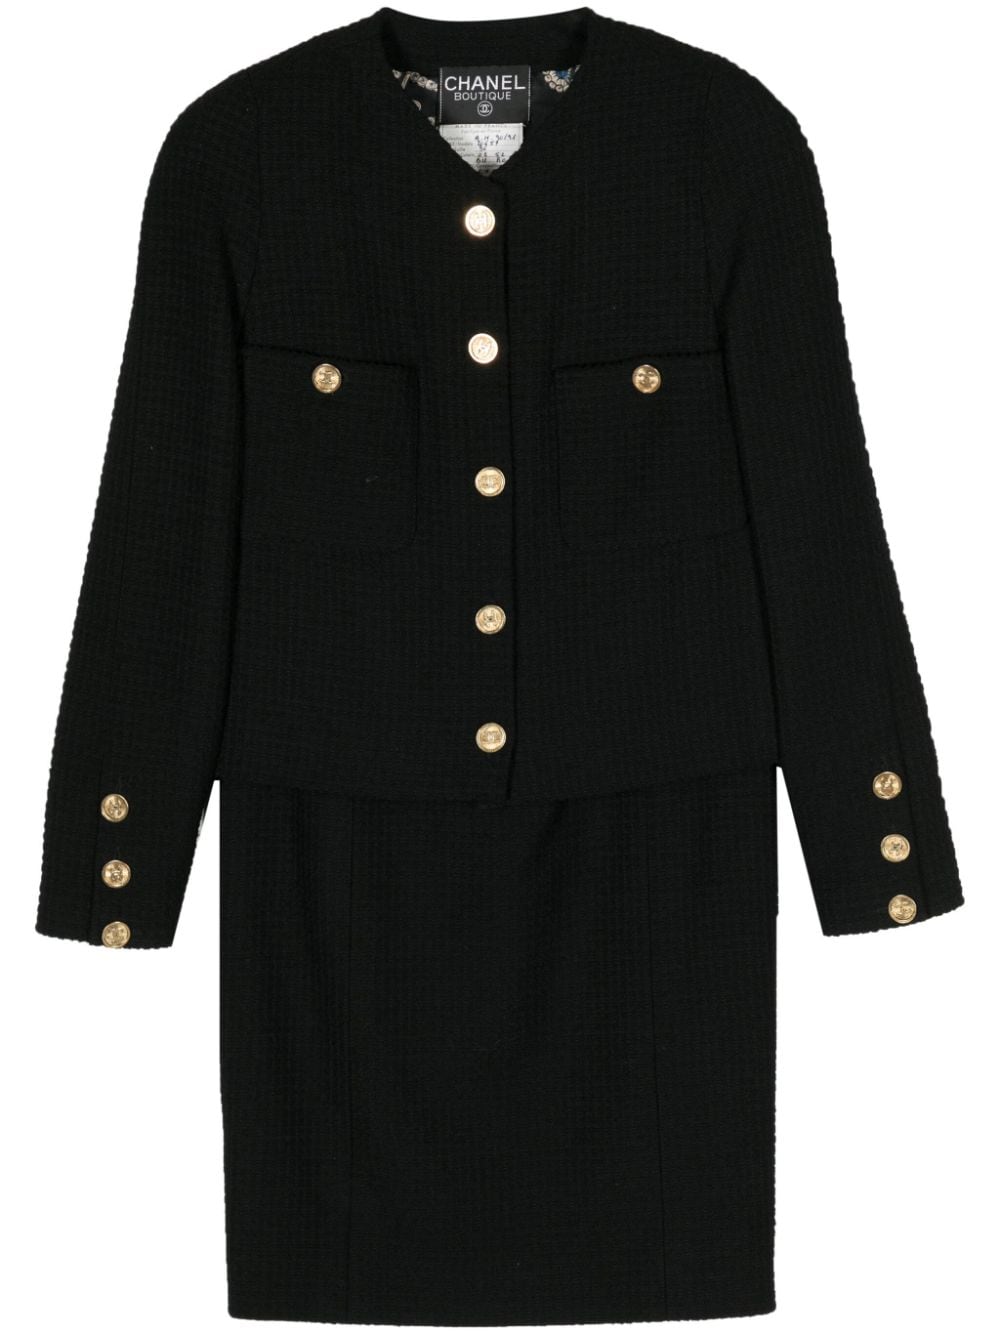 Pre-owned Chanel 粗花呢羊毛半身裙西装套装（1990年代典藏款） In Black